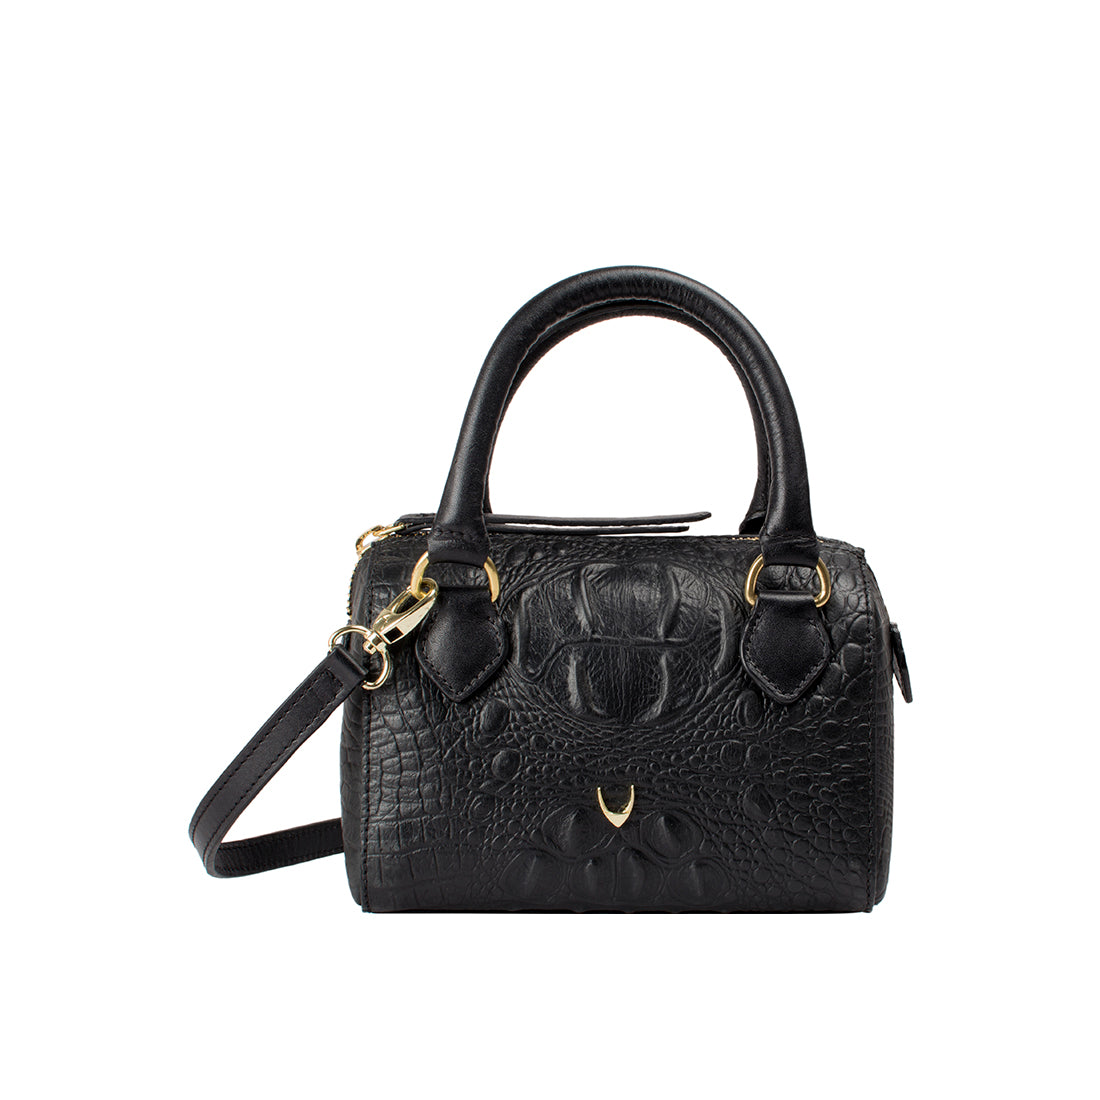 Buy Brown Fl Heidi Shoulder Bag Online - Hidesign